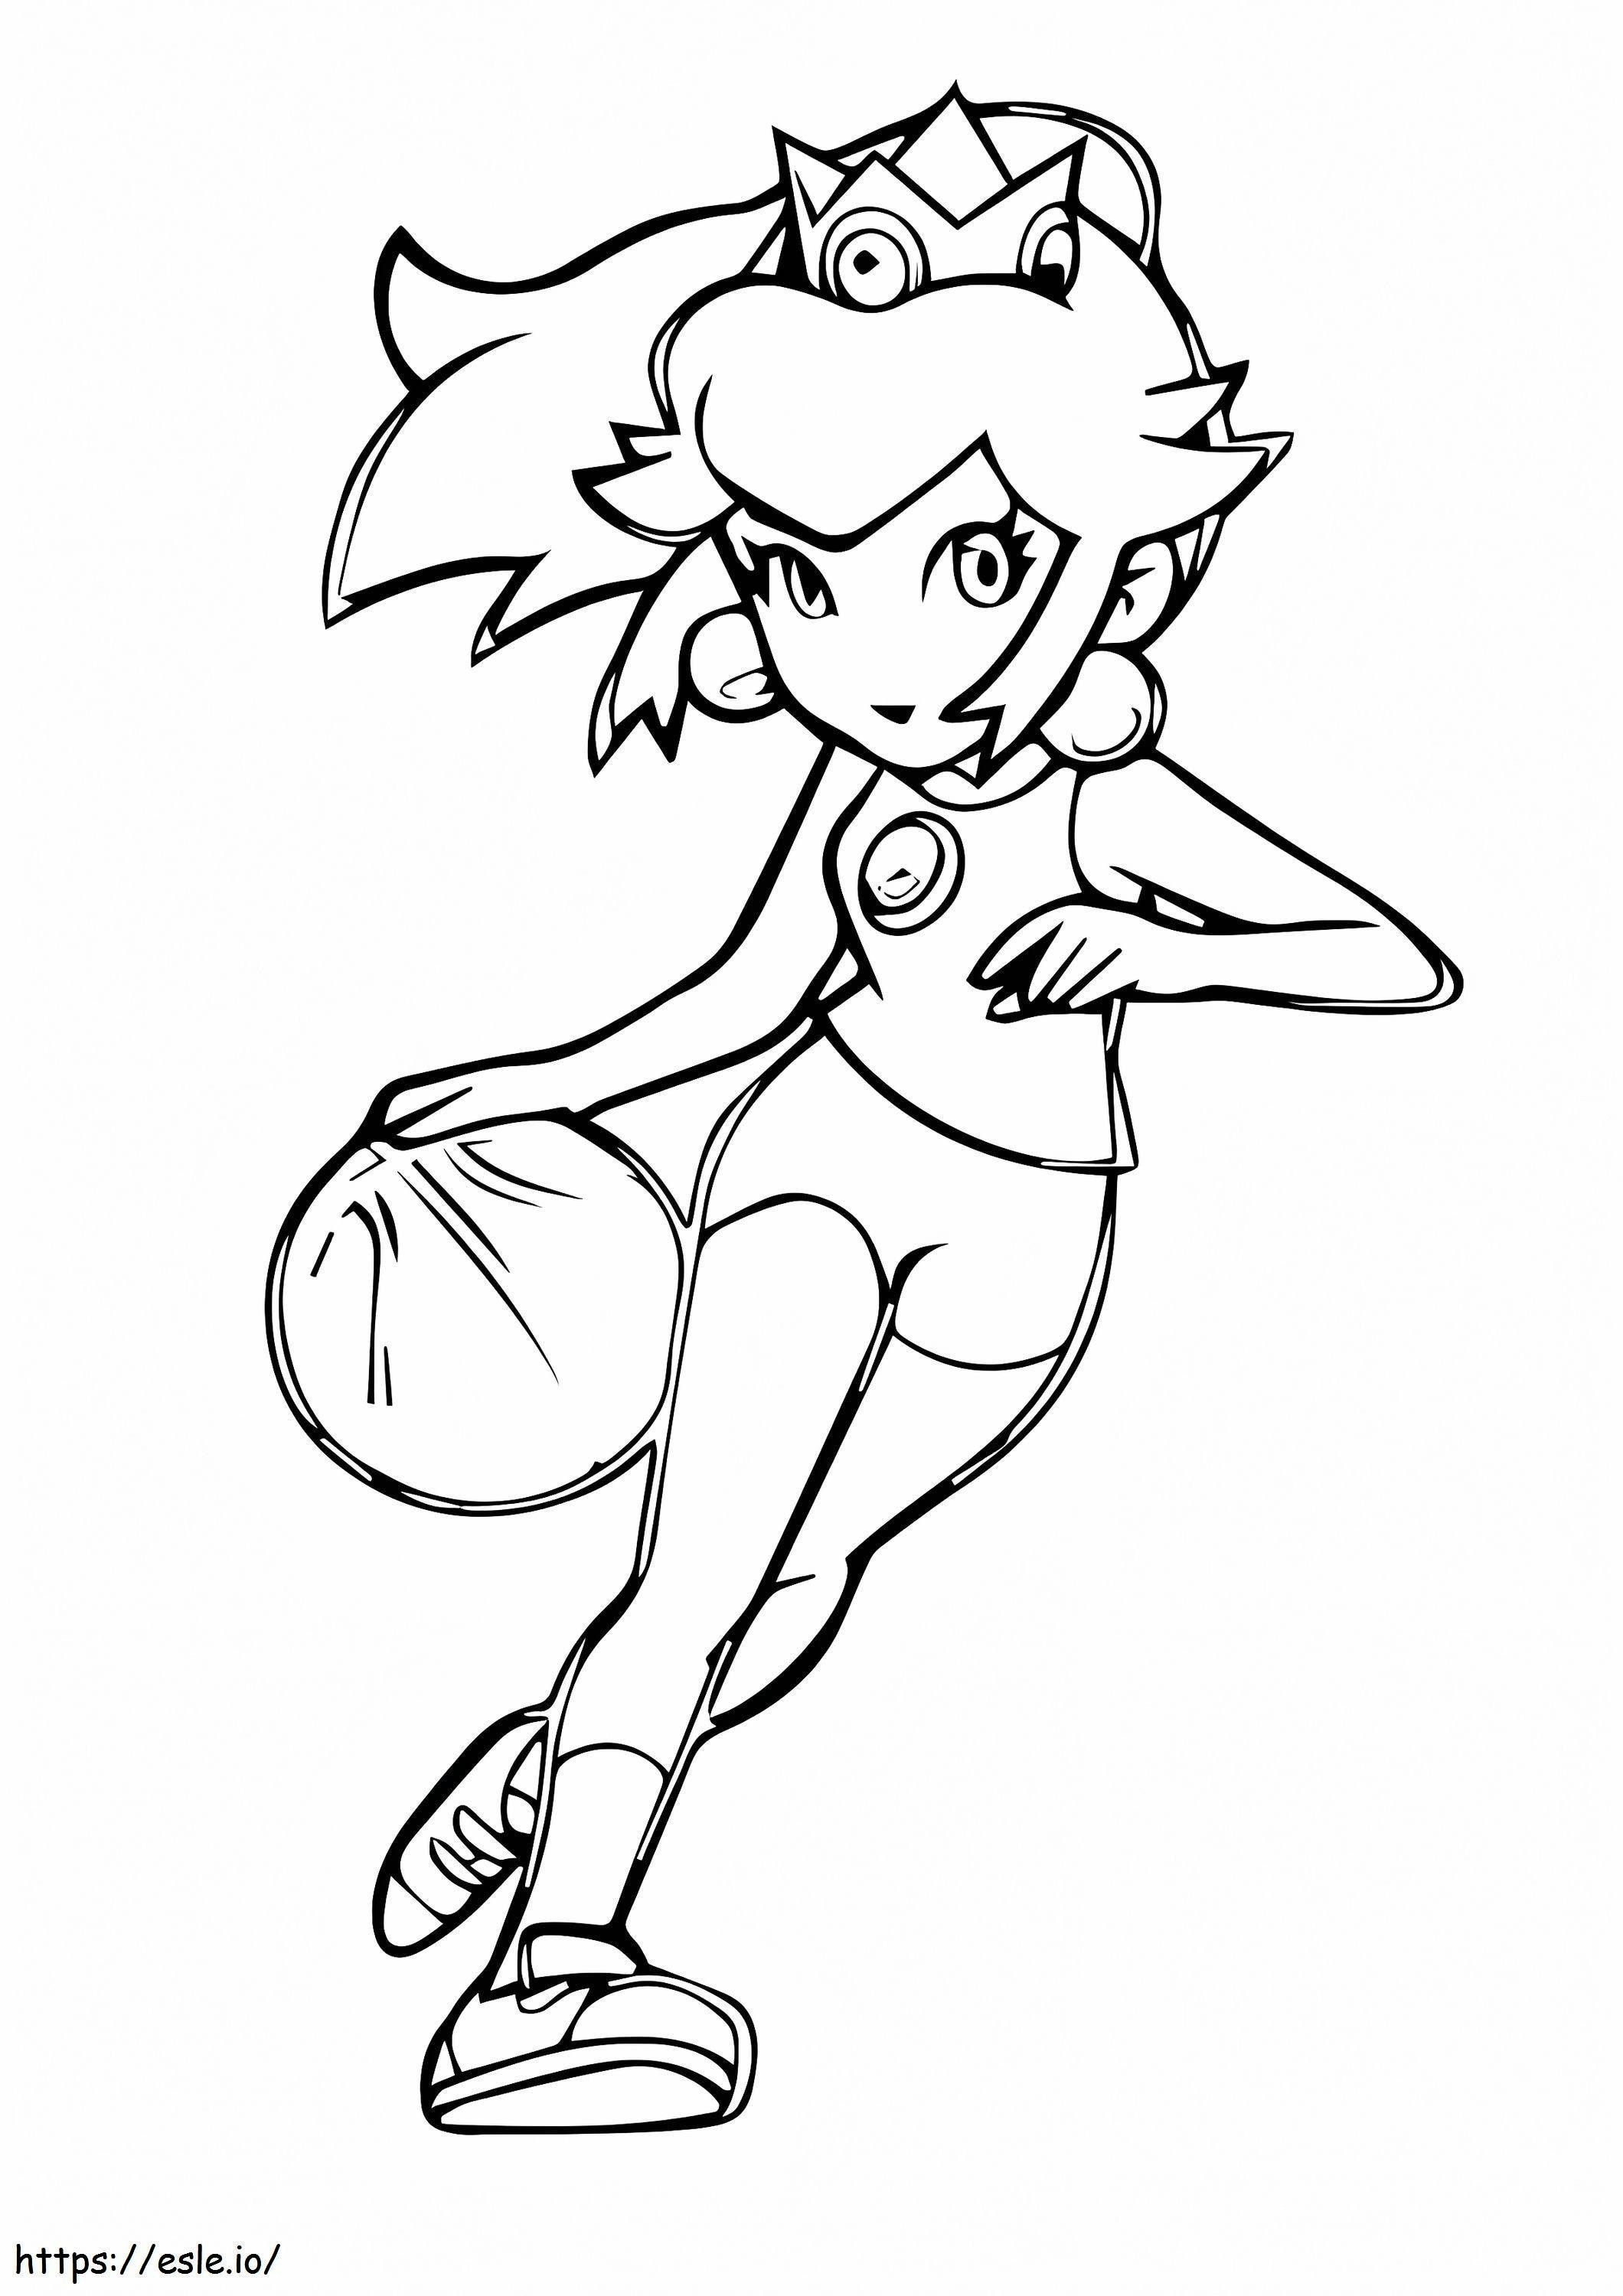 Princesa Peach jogando basquete para colorir